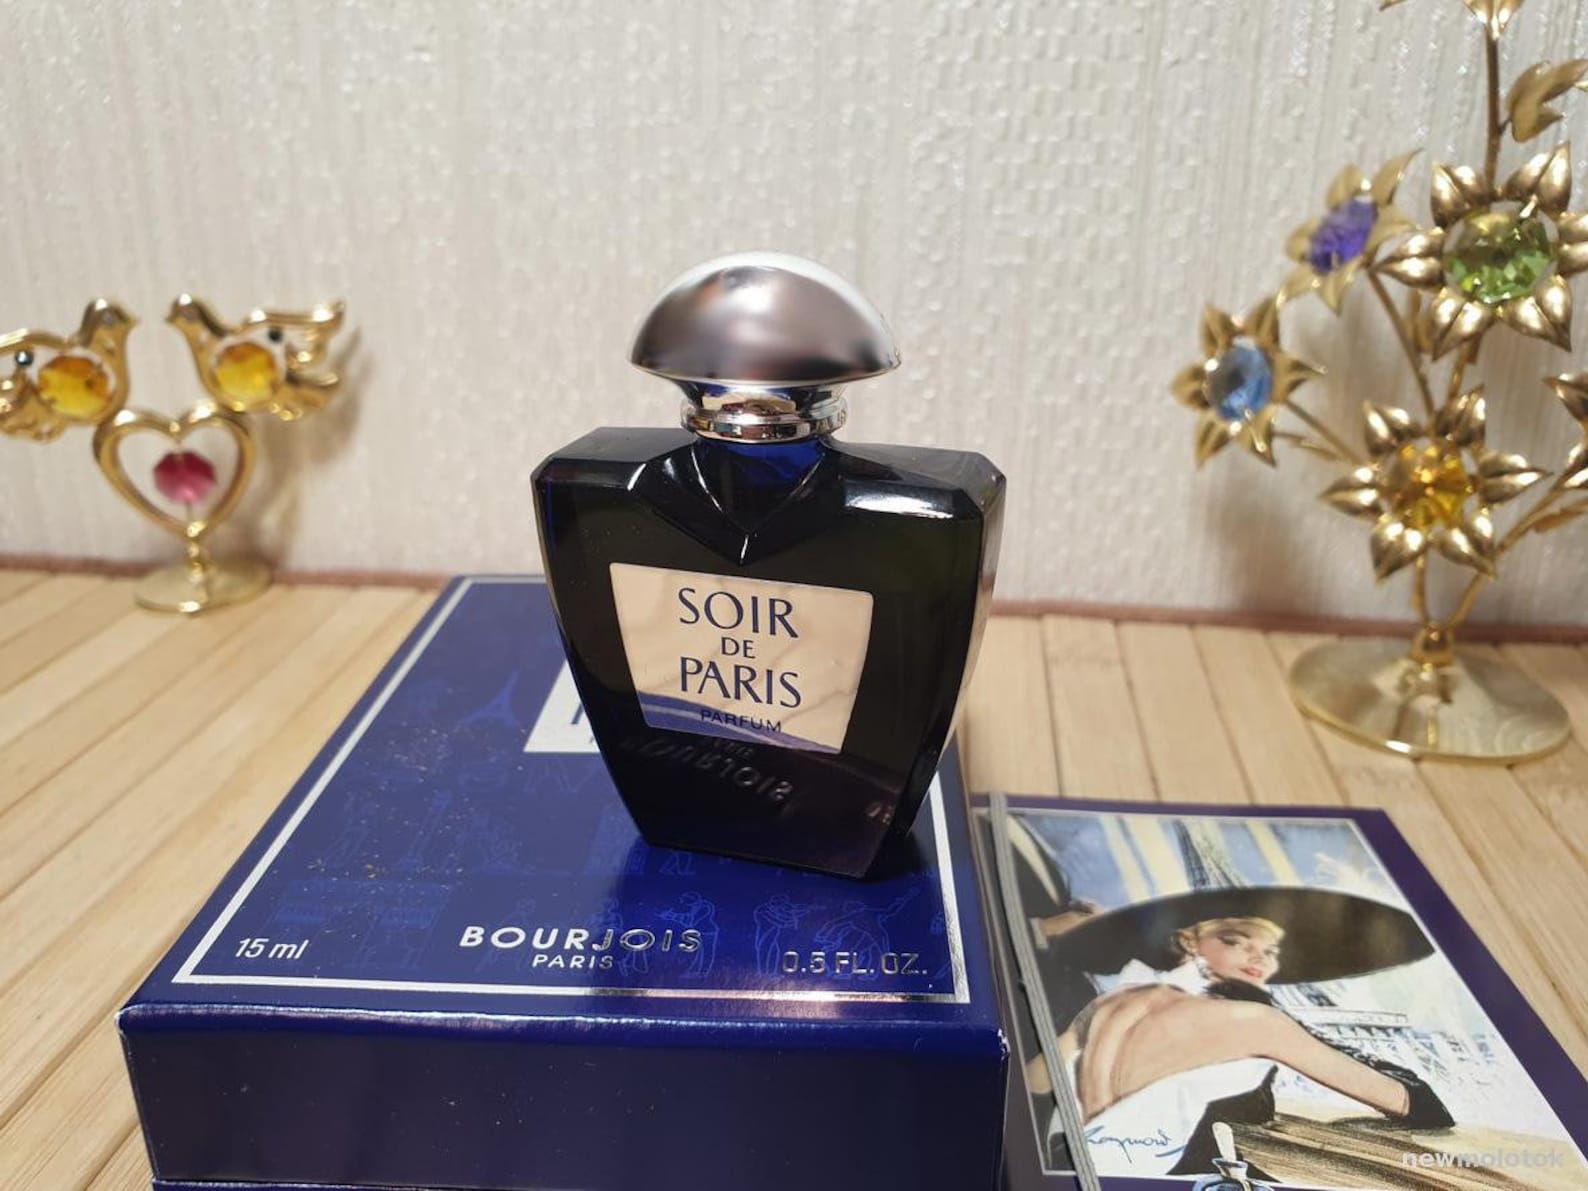 Soir de Paris Bourjois 15ml. Perfume Vintage | Etsy